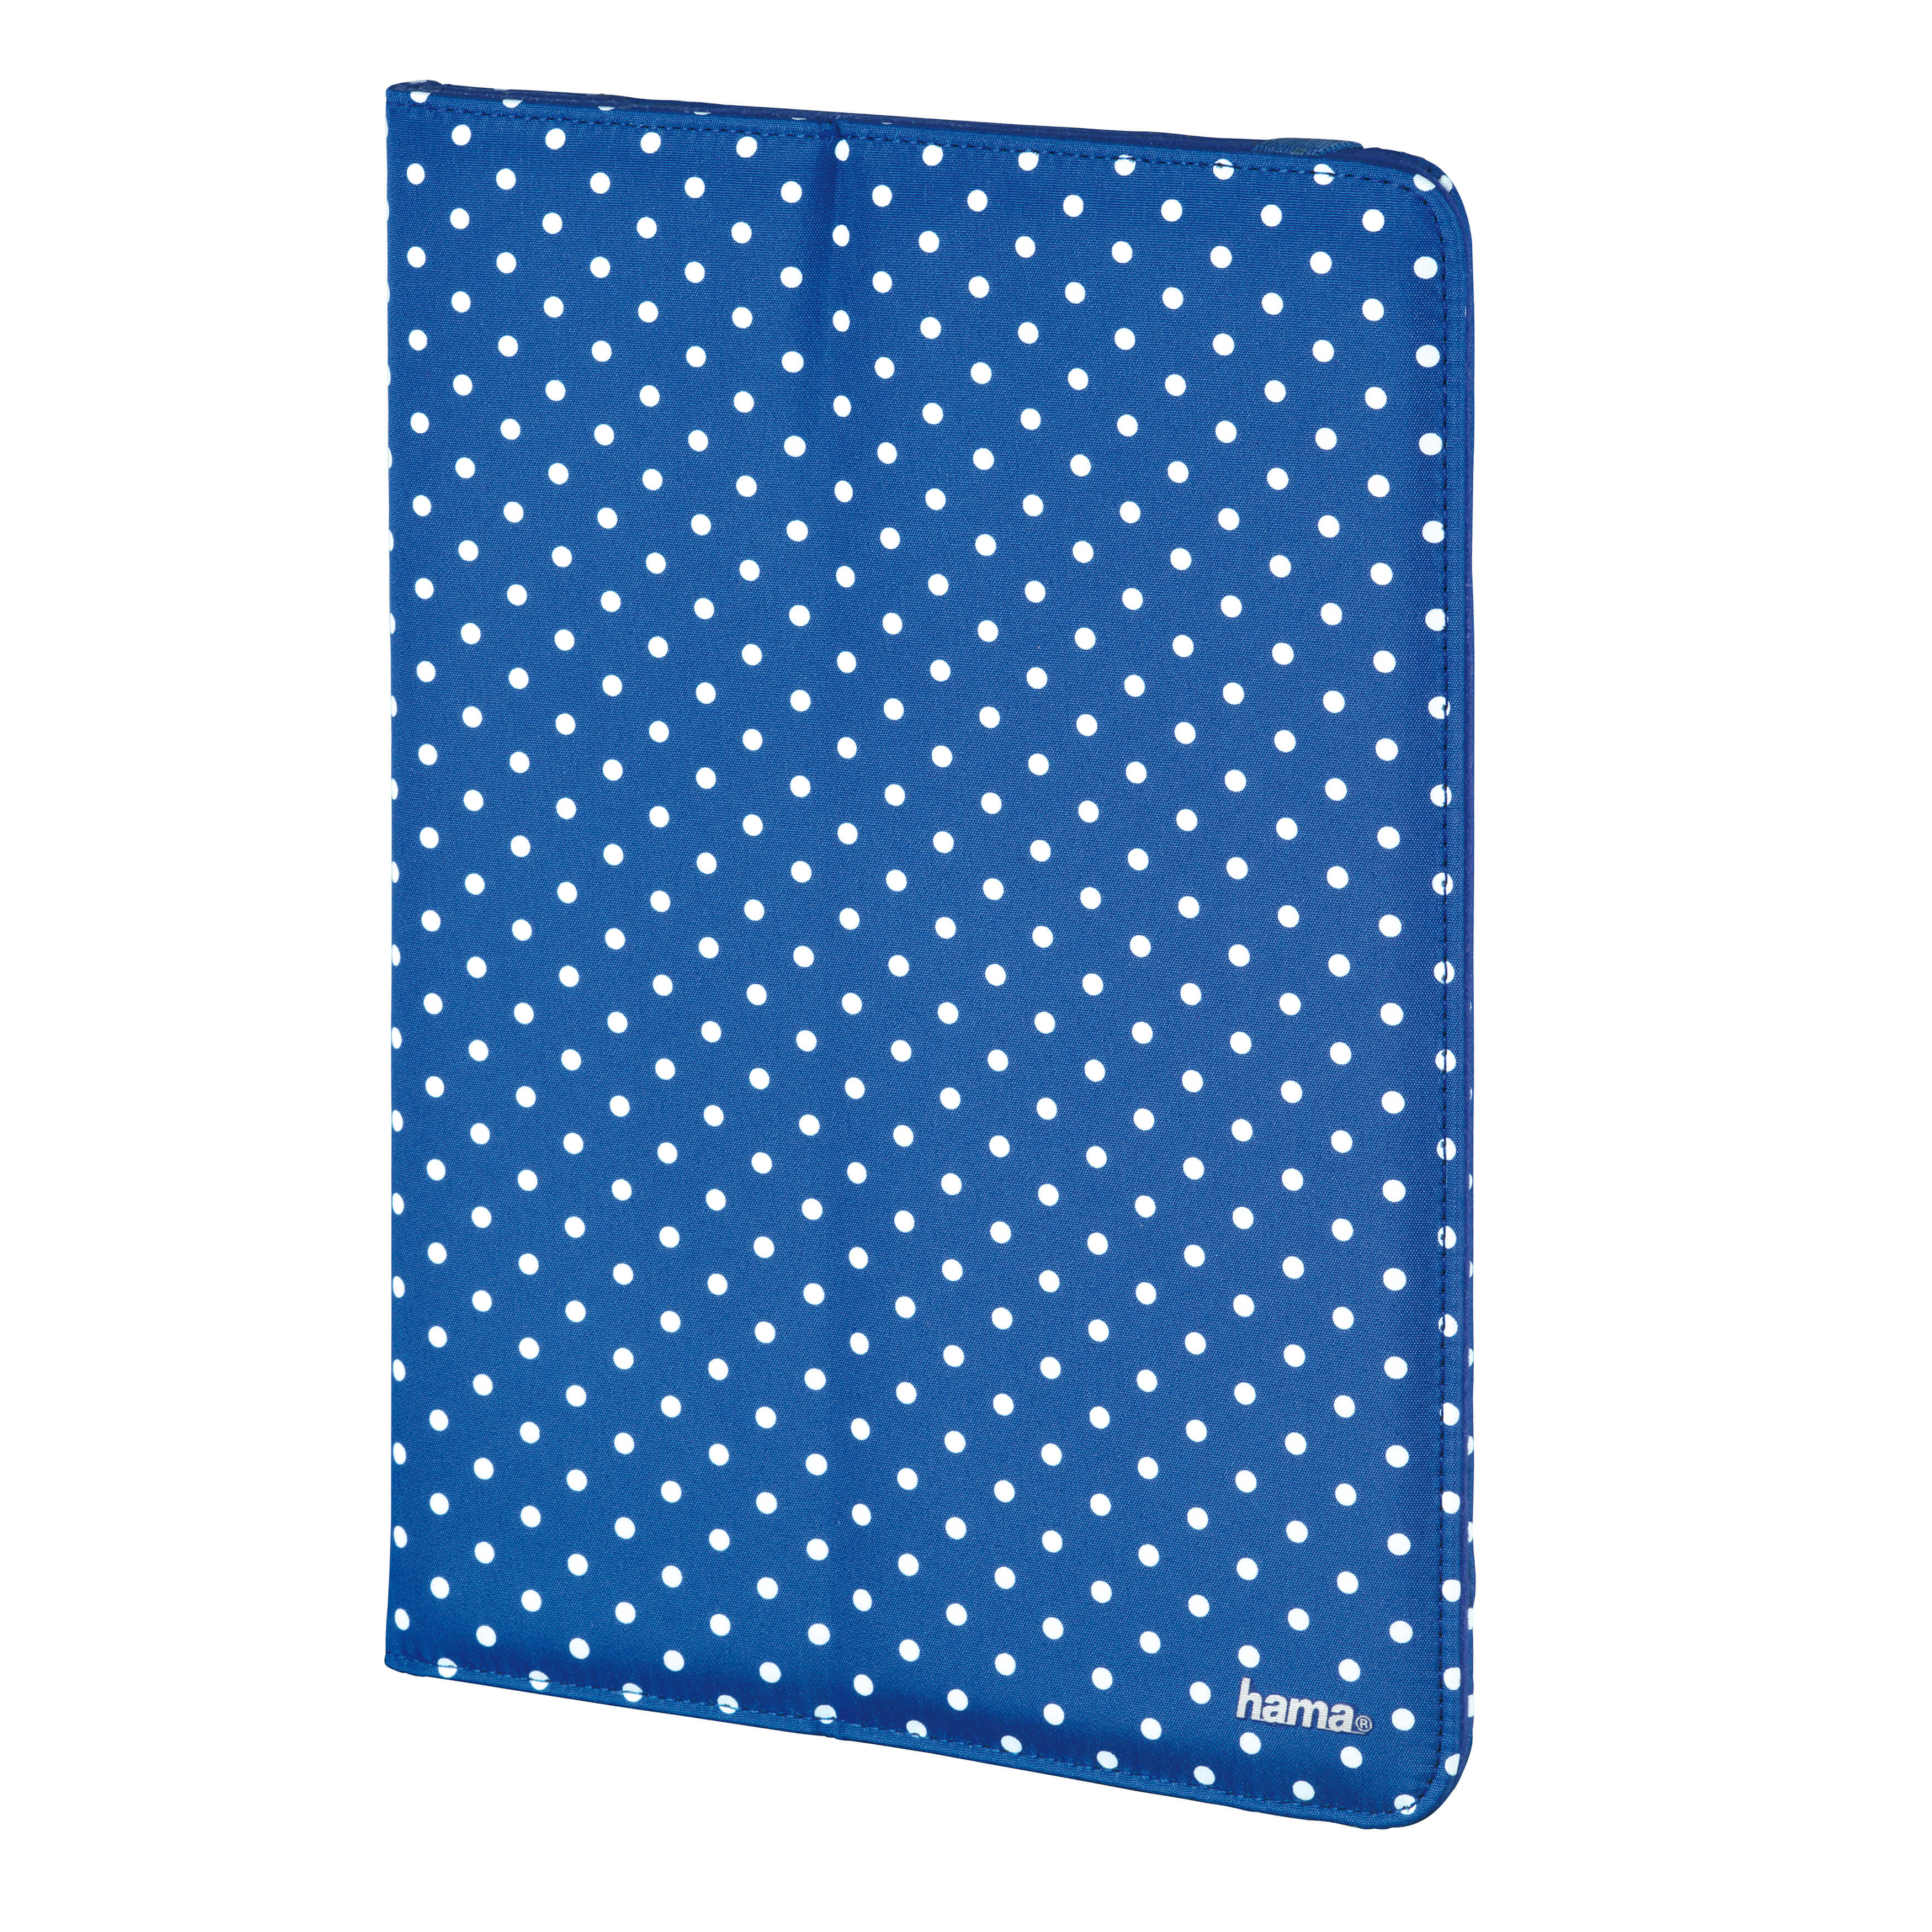 HAMA PolkaDot Tablet cover 10,1 blue